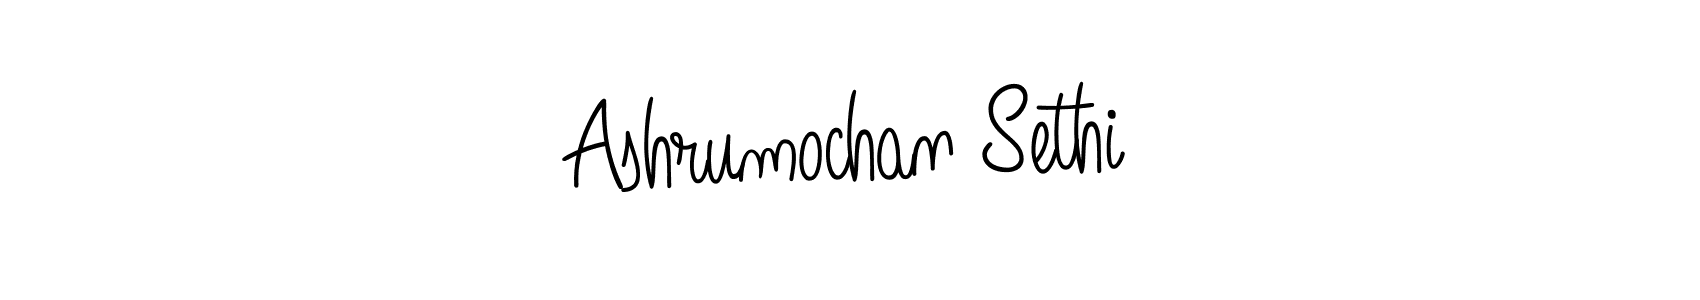 How to Draw Ashrumochan Sethi signature style? Angelique-Rose-font-FFP is a latest design signature styles for name Ashrumochan Sethi. Ashrumochan Sethi signature style 5 images and pictures png